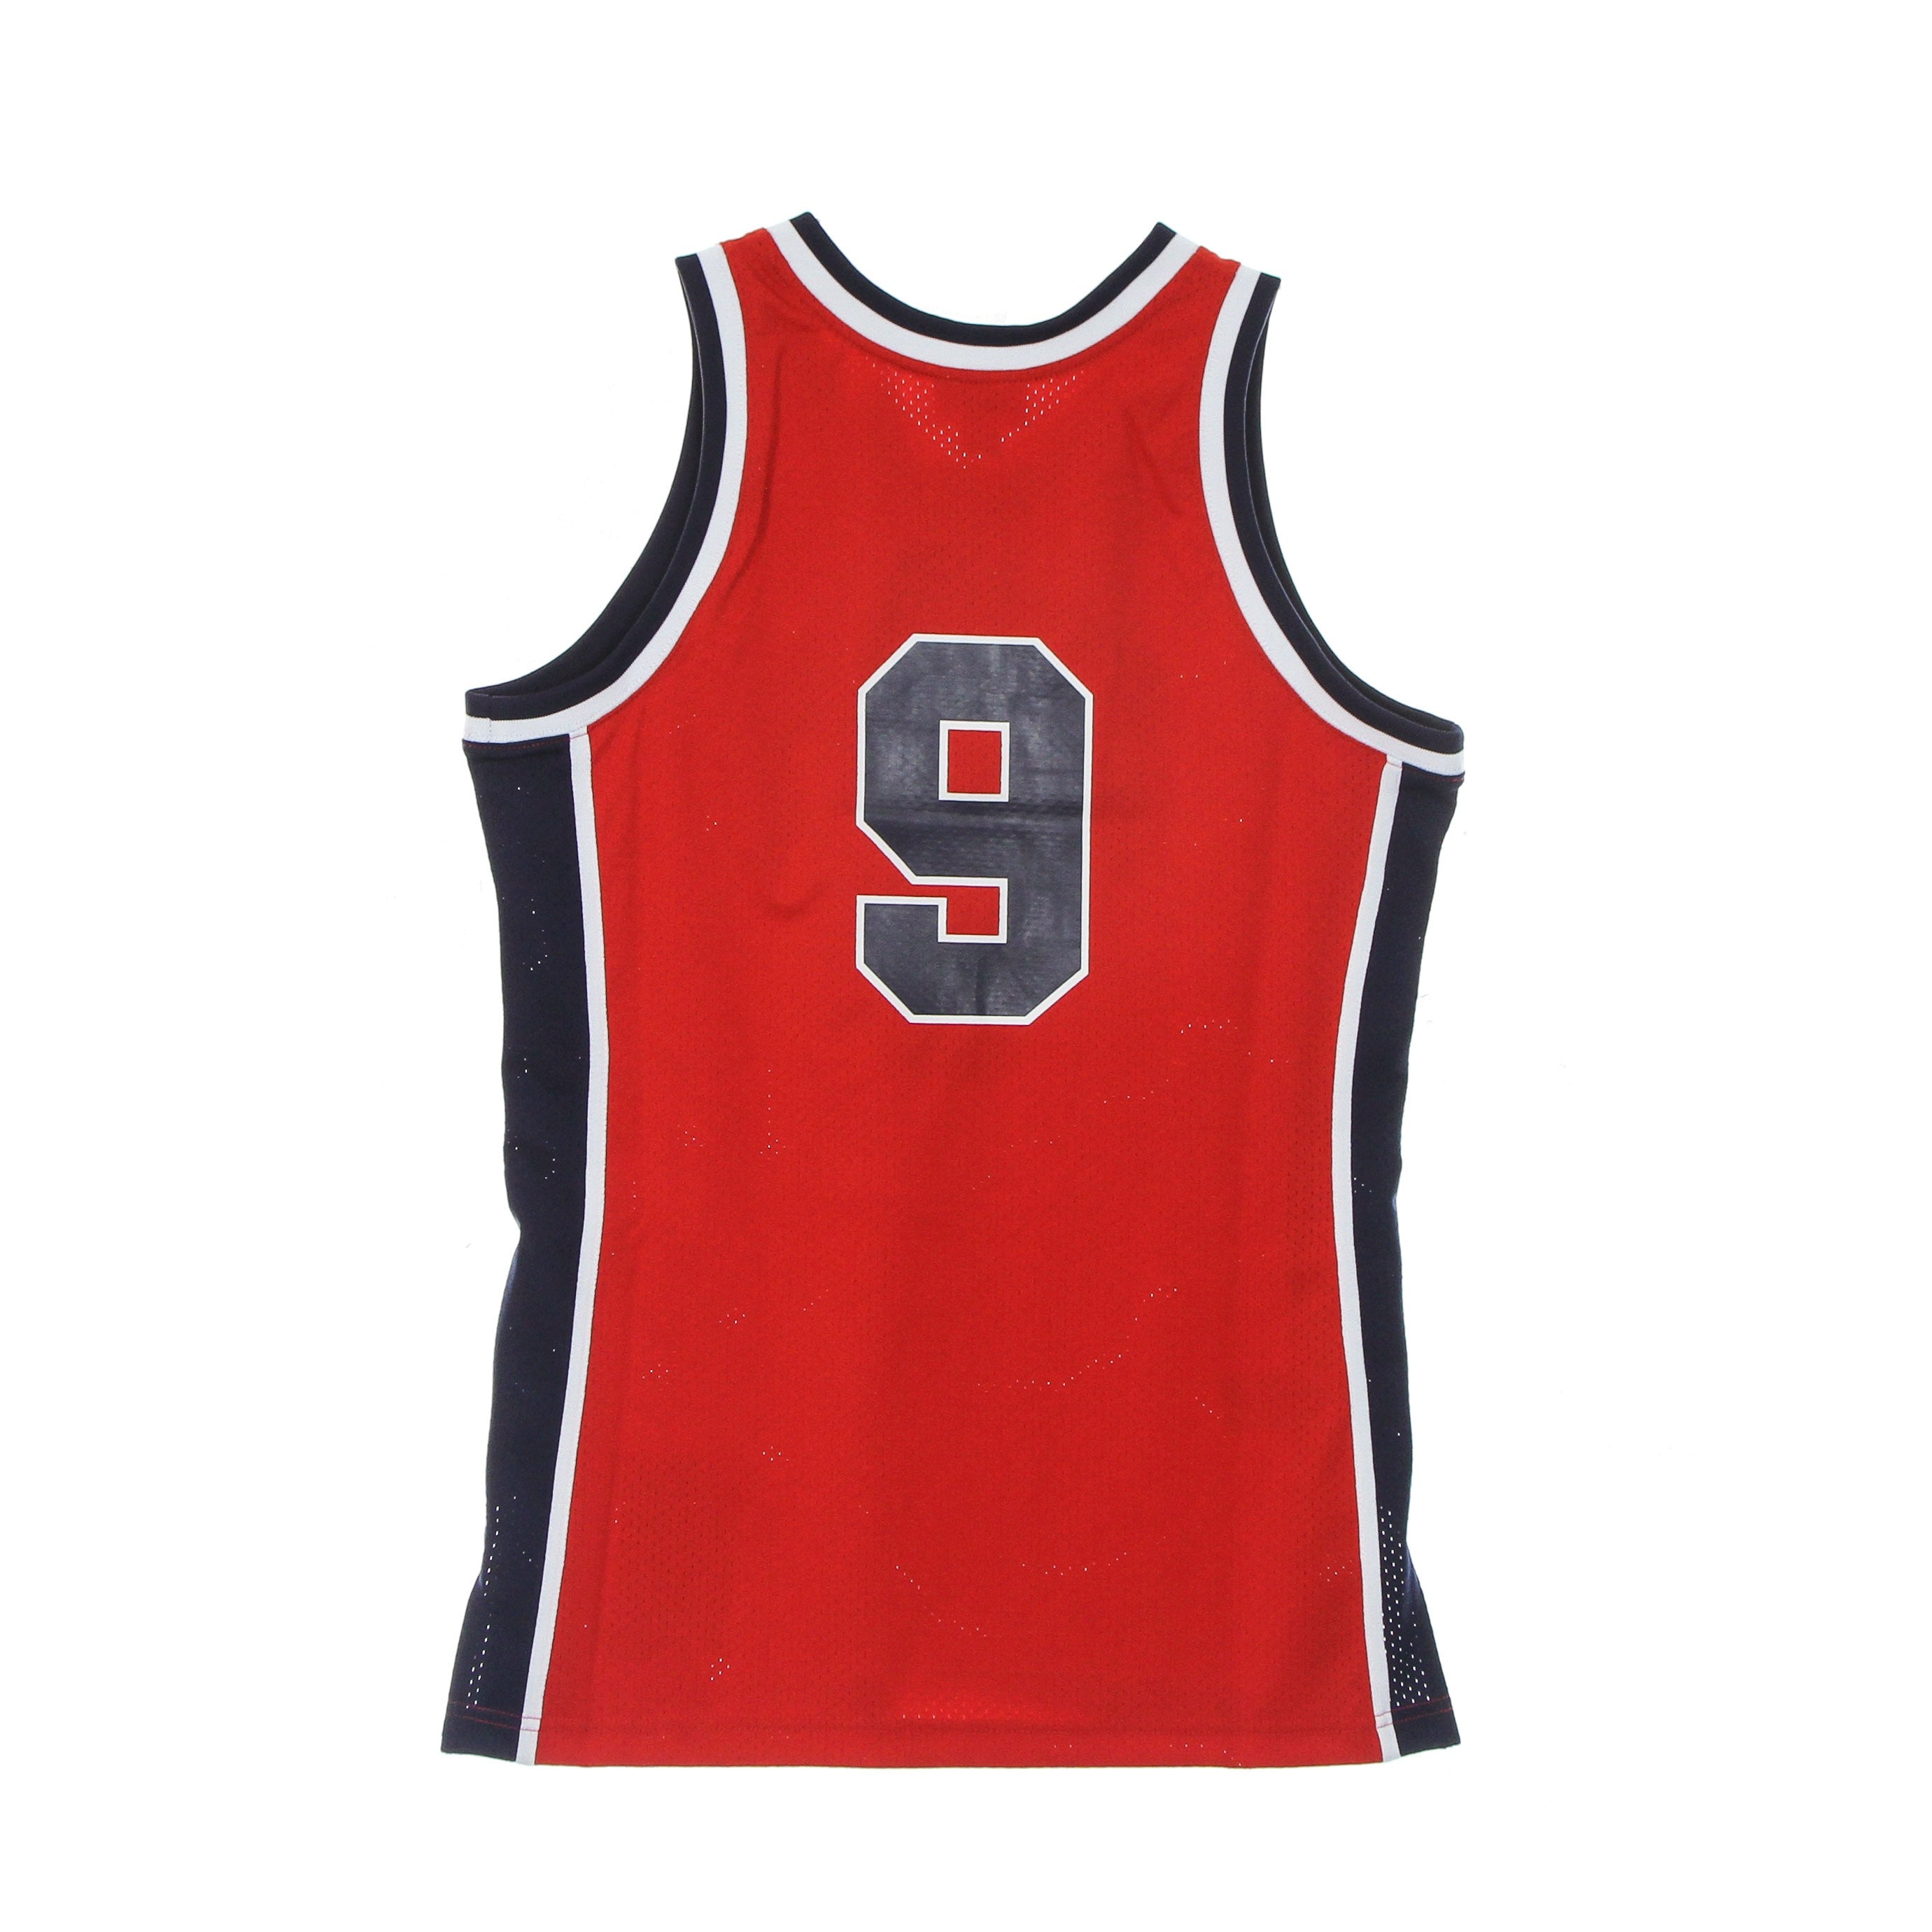 Mitchell & Ness, Canotta Basket Uomo Nba Authentic Jersey Hardwood Classics No 9 Michael Jordan 1984 Team Usa, 